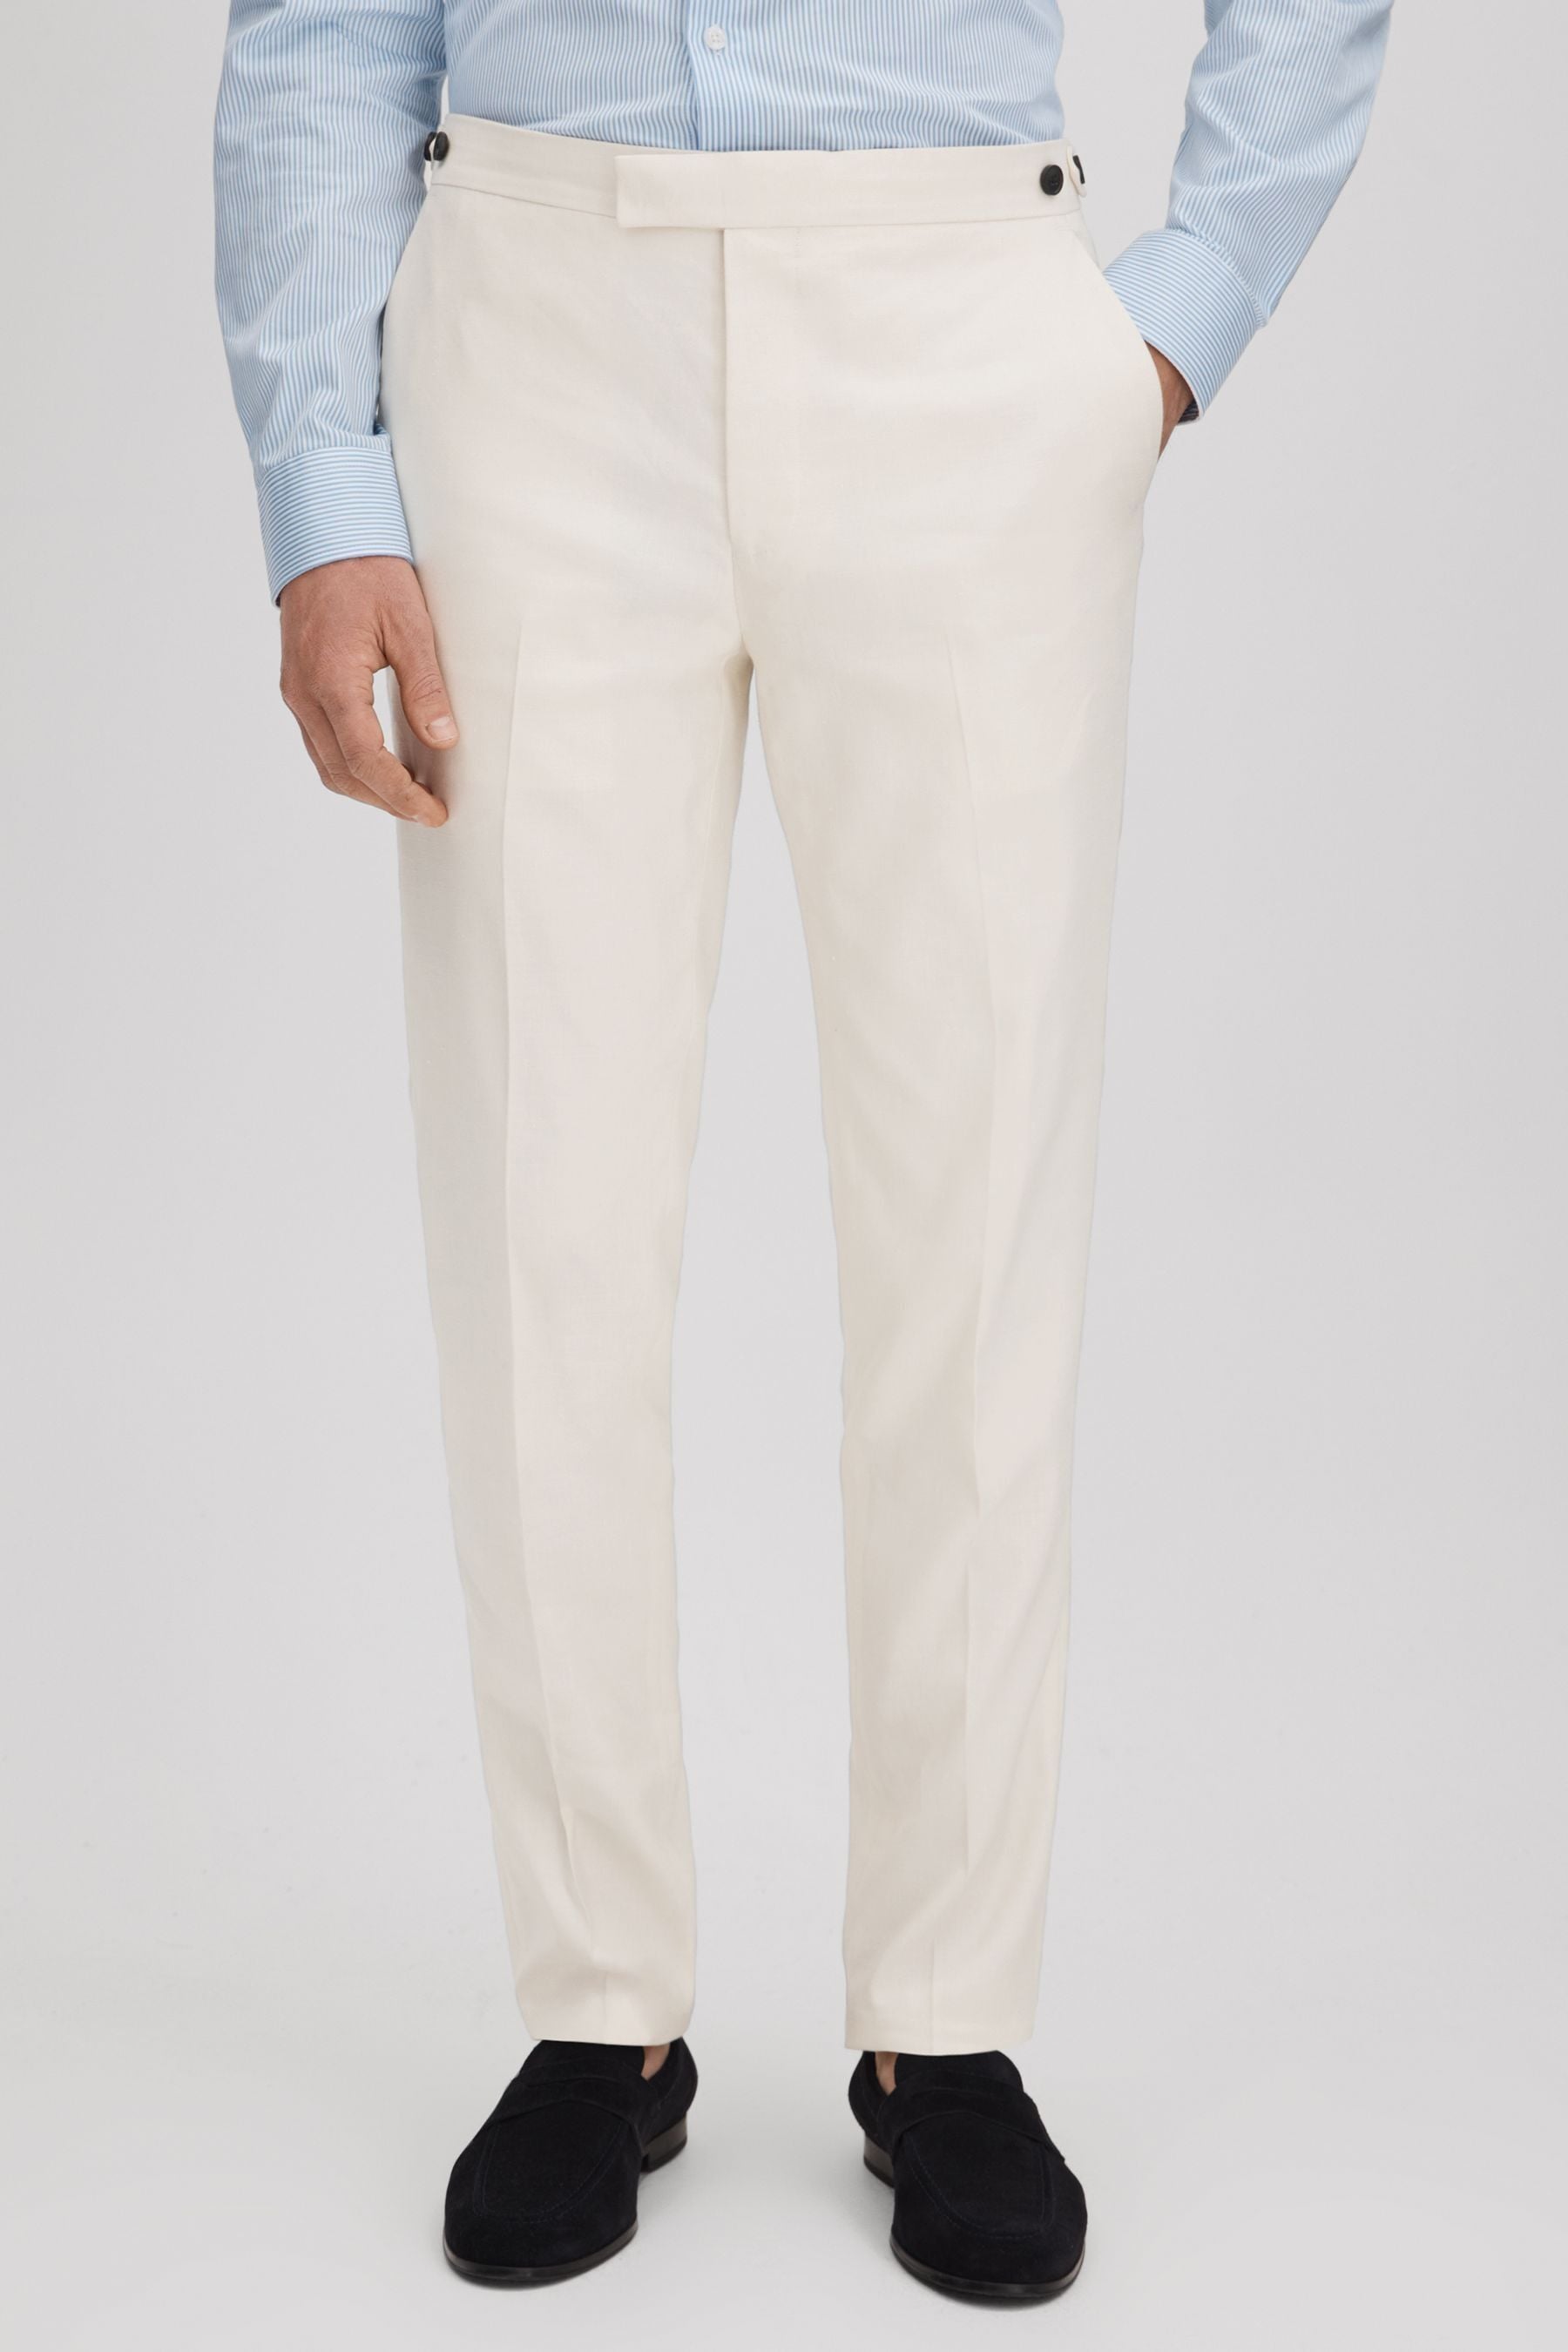 Reiss Heat - Off White Linen Blend Adjuster Trousers, 38